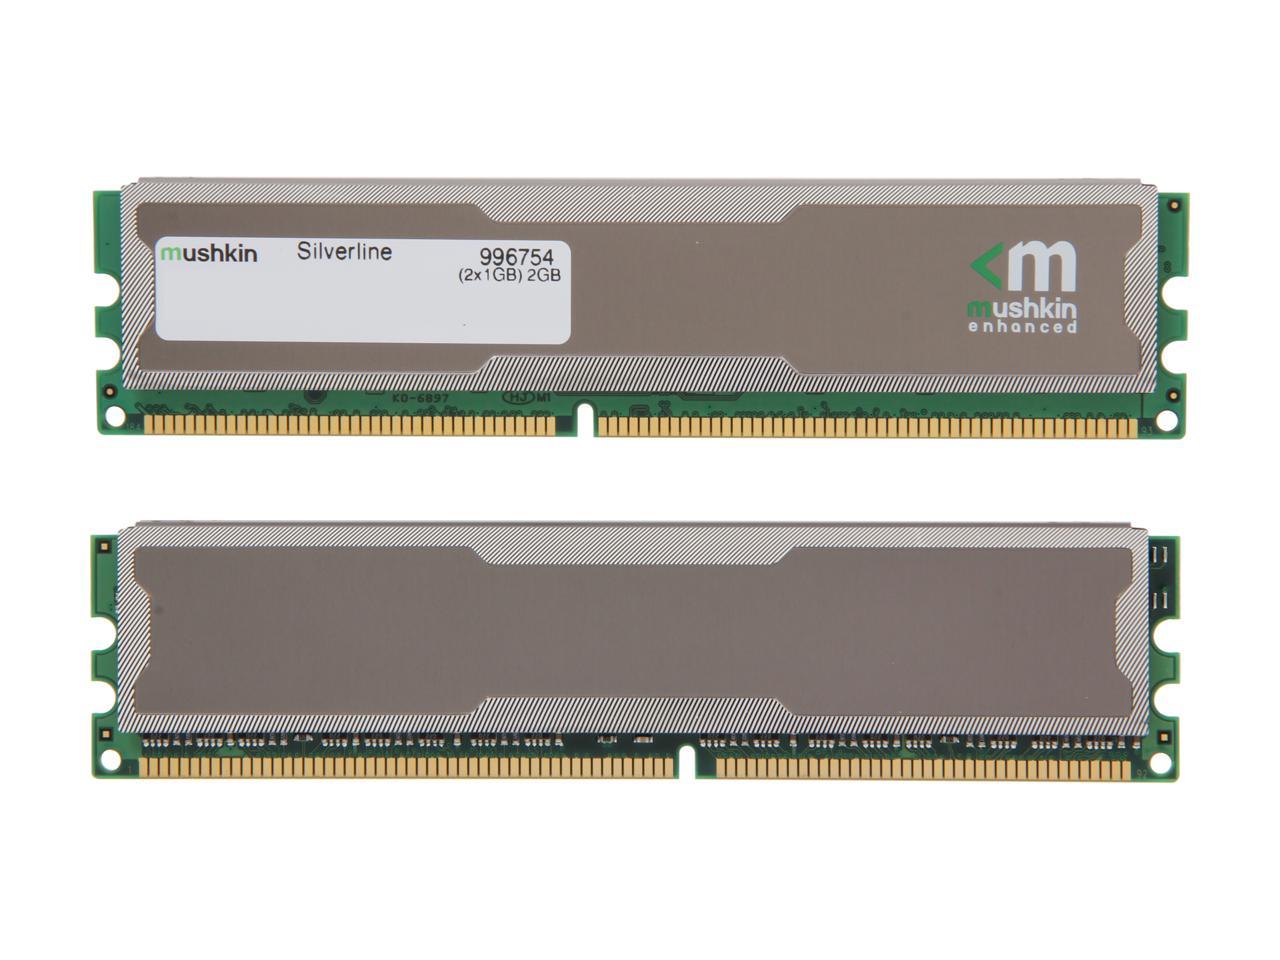 Mushkin Enhanced Silverline 2GB (2 x 1GB) DDR 400 (PC 3200) Desktop Memory Model 996754